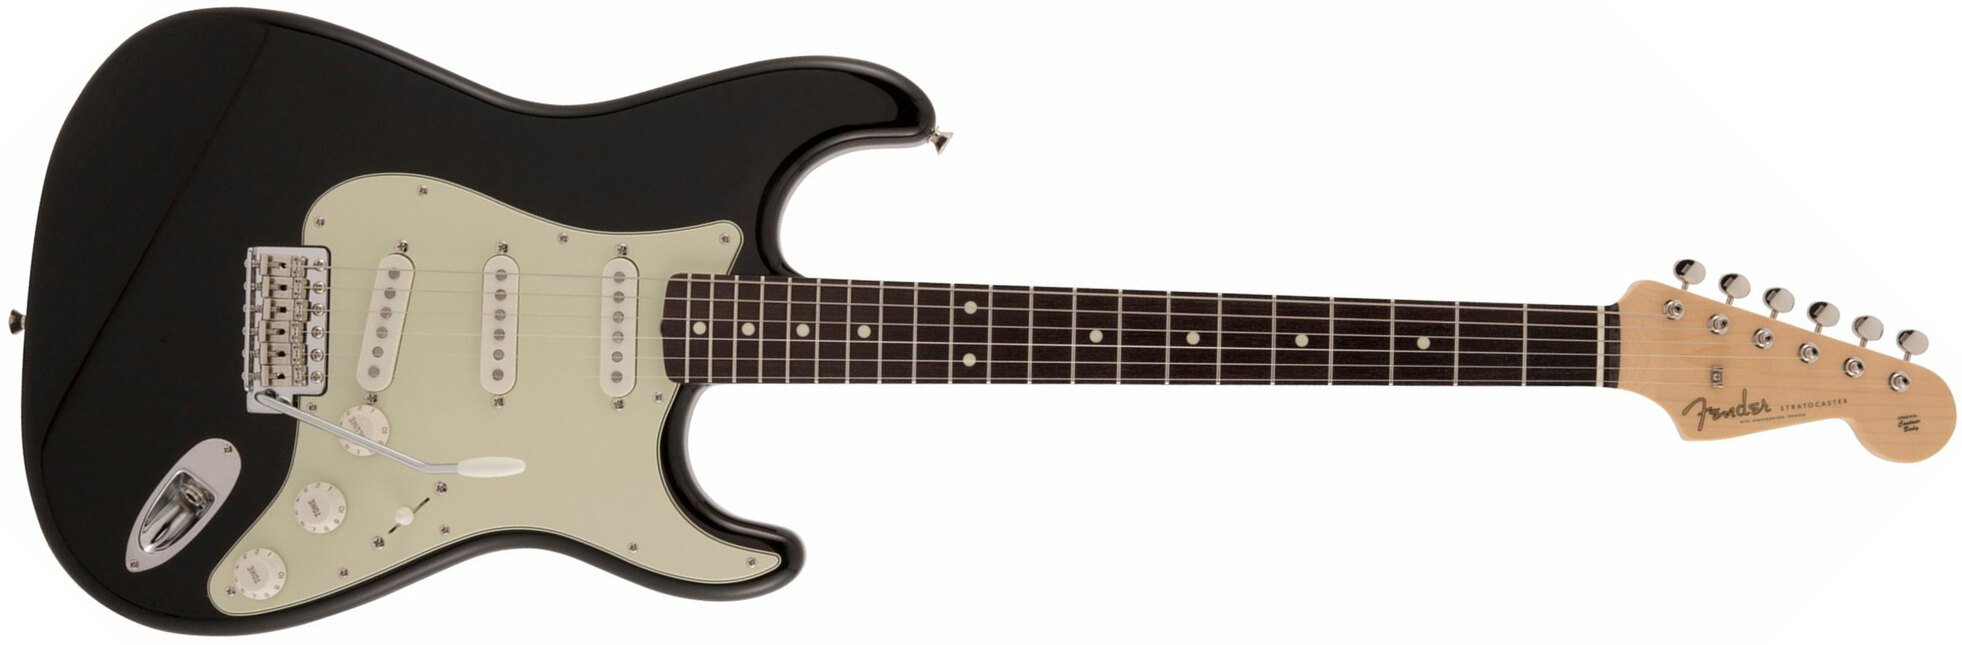 Fender Strat Traditional Ii 60s Mij Jap 3s Trem Rw - Black - Guitarra eléctrica con forma de str. - Main picture